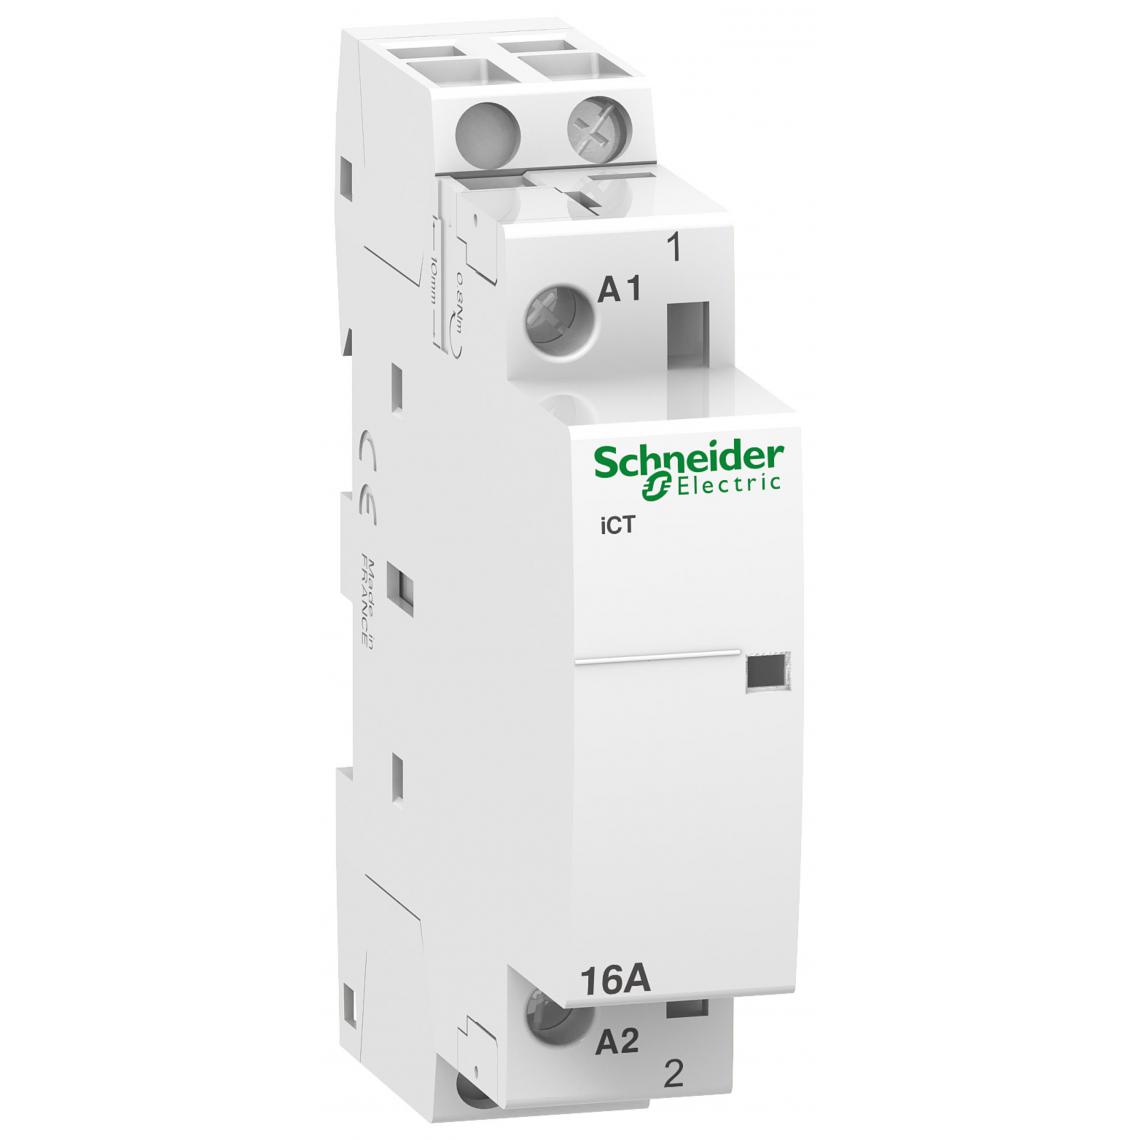 Schneider Electric - contacteur - ict - 16a - 1no - 24vca - schneider acti9 a9c22111 - Télérupteurs, minuteries et horloges